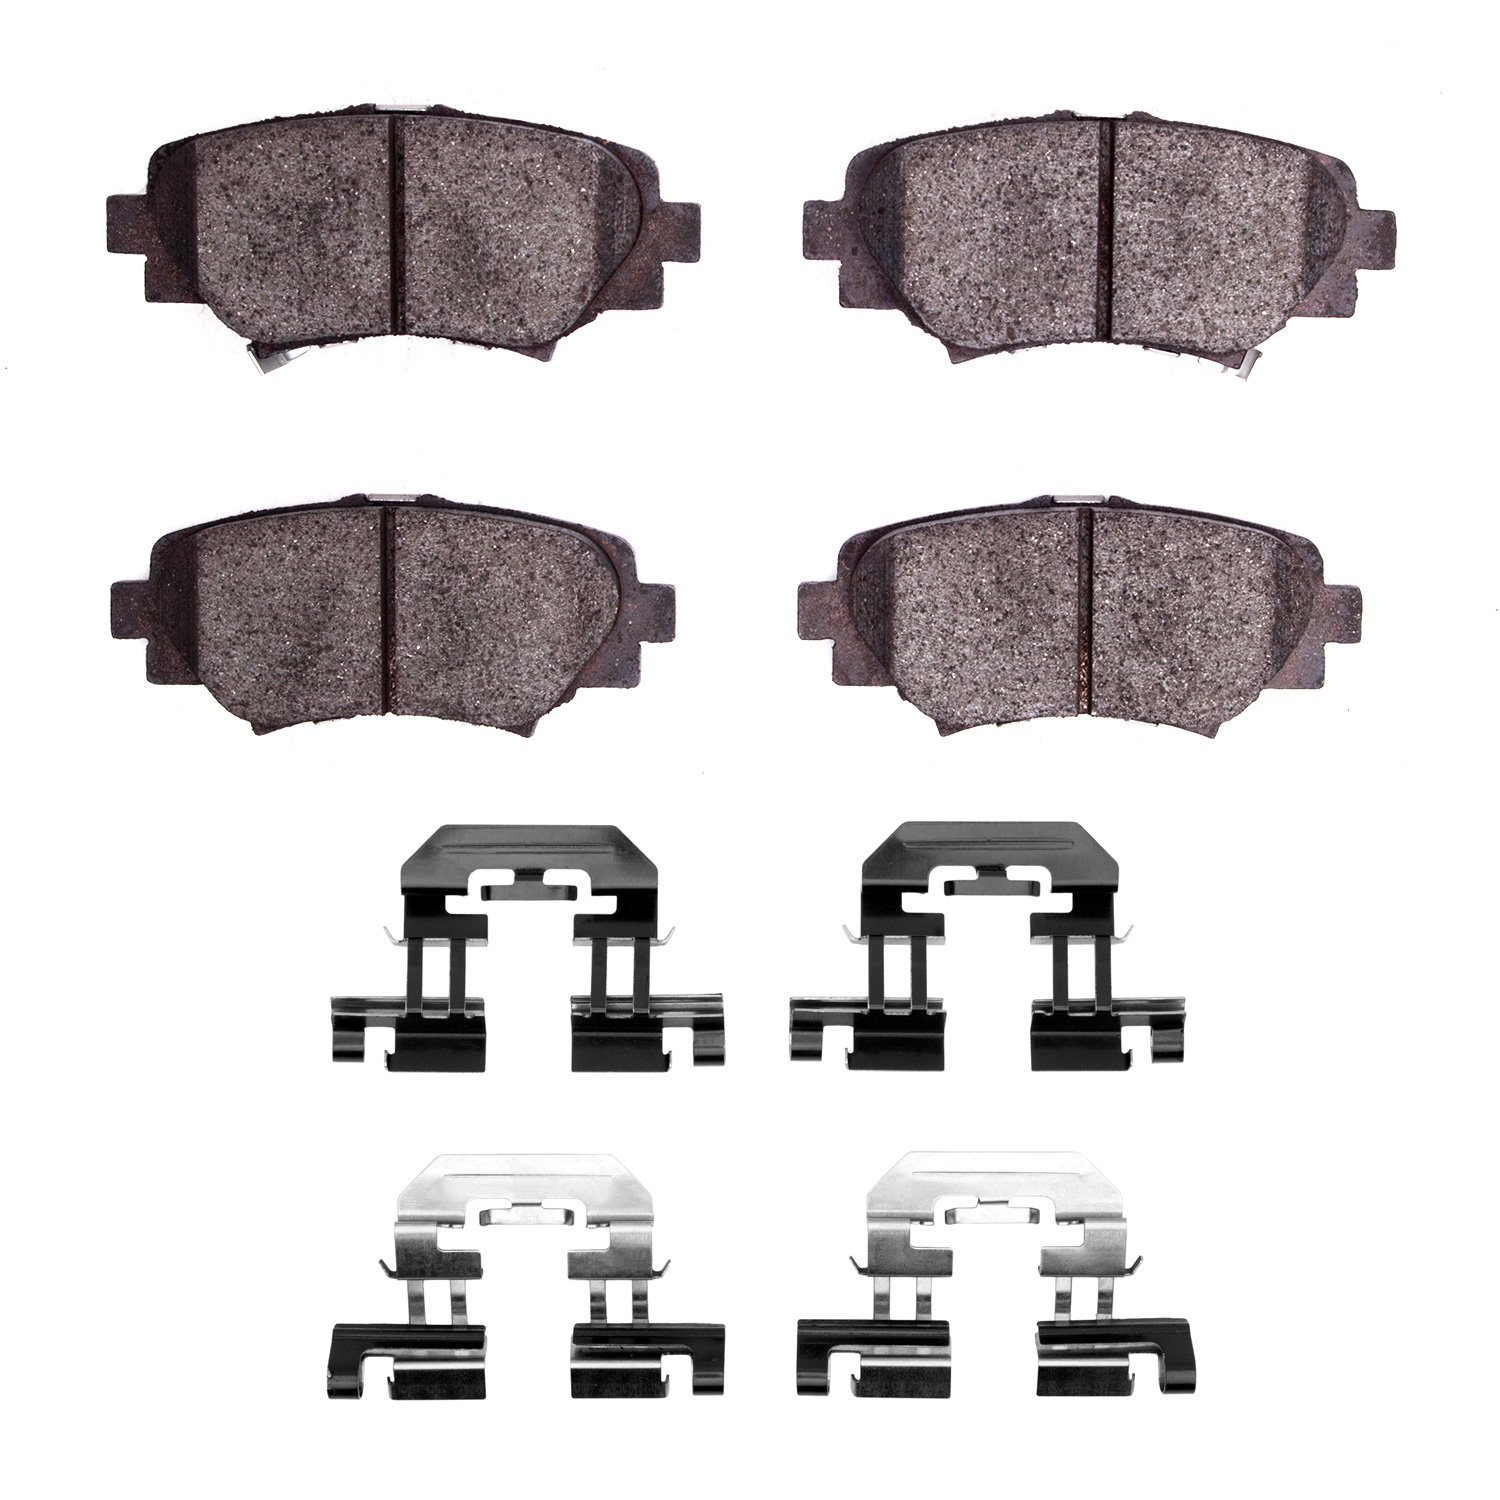 1310-1729-01 3000-Series Ceramic Brake Pads & Hardware Kit, 2014-2018 Ford/Lincoln/Mercury/Mazda, Position: Rear